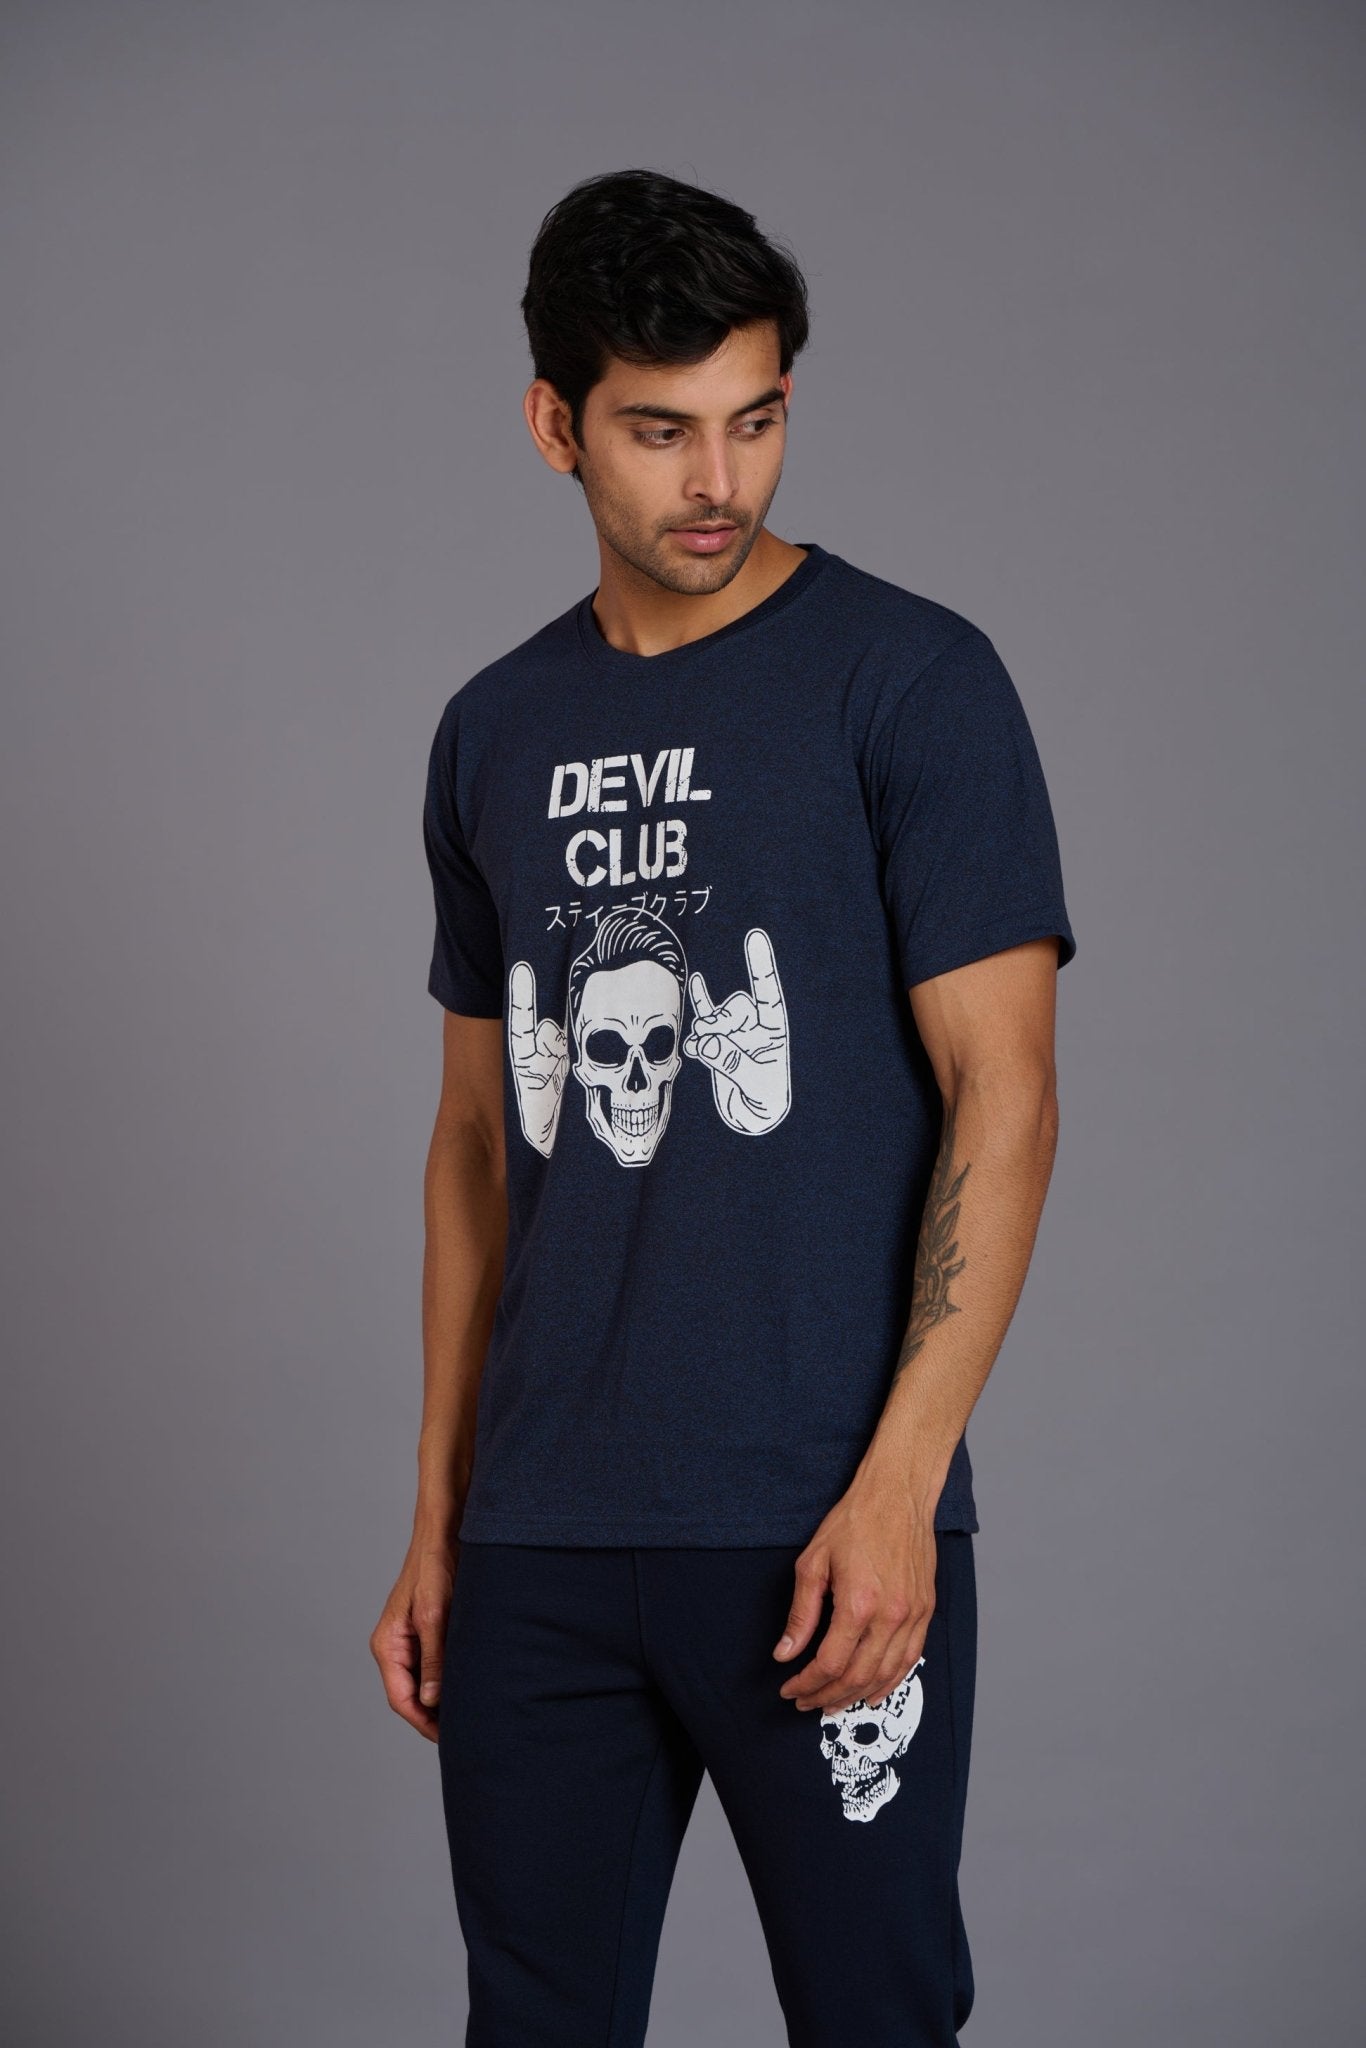 Devil's Club Printed Navy Blue T-Shirt for Men - Go Devil